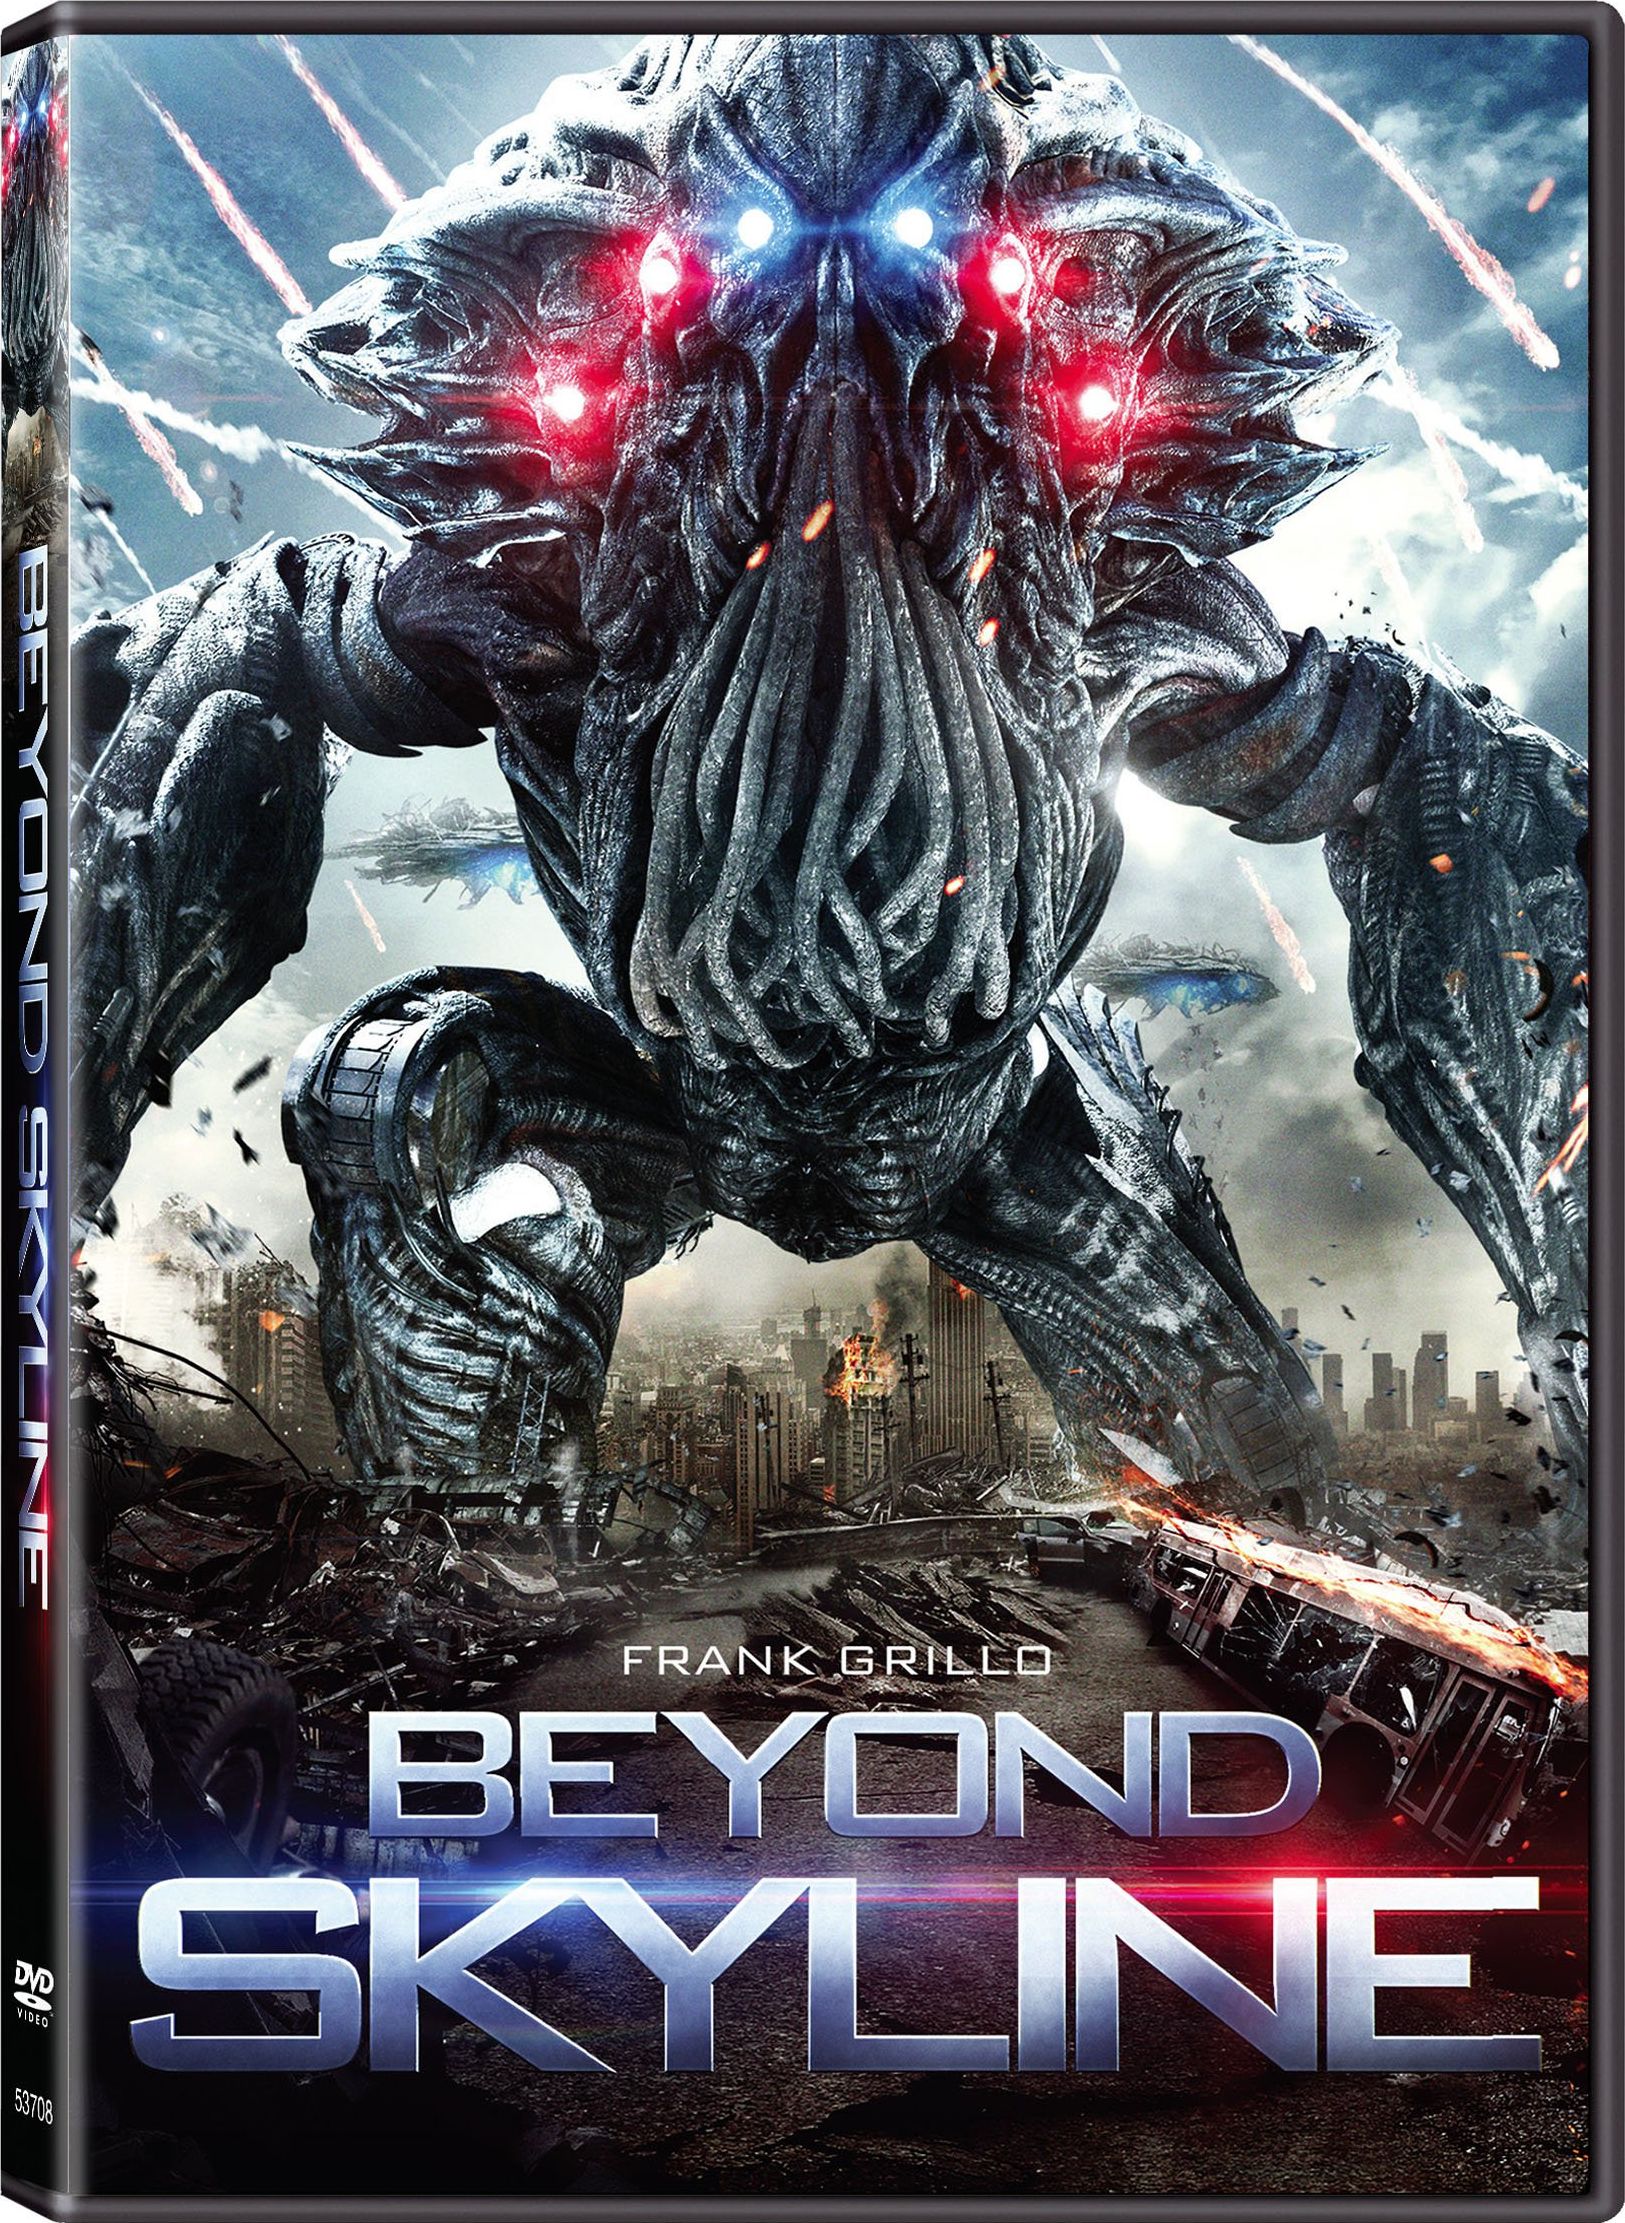 Beyond Skyline DVD Release Date January 16, 20181625 x 2223